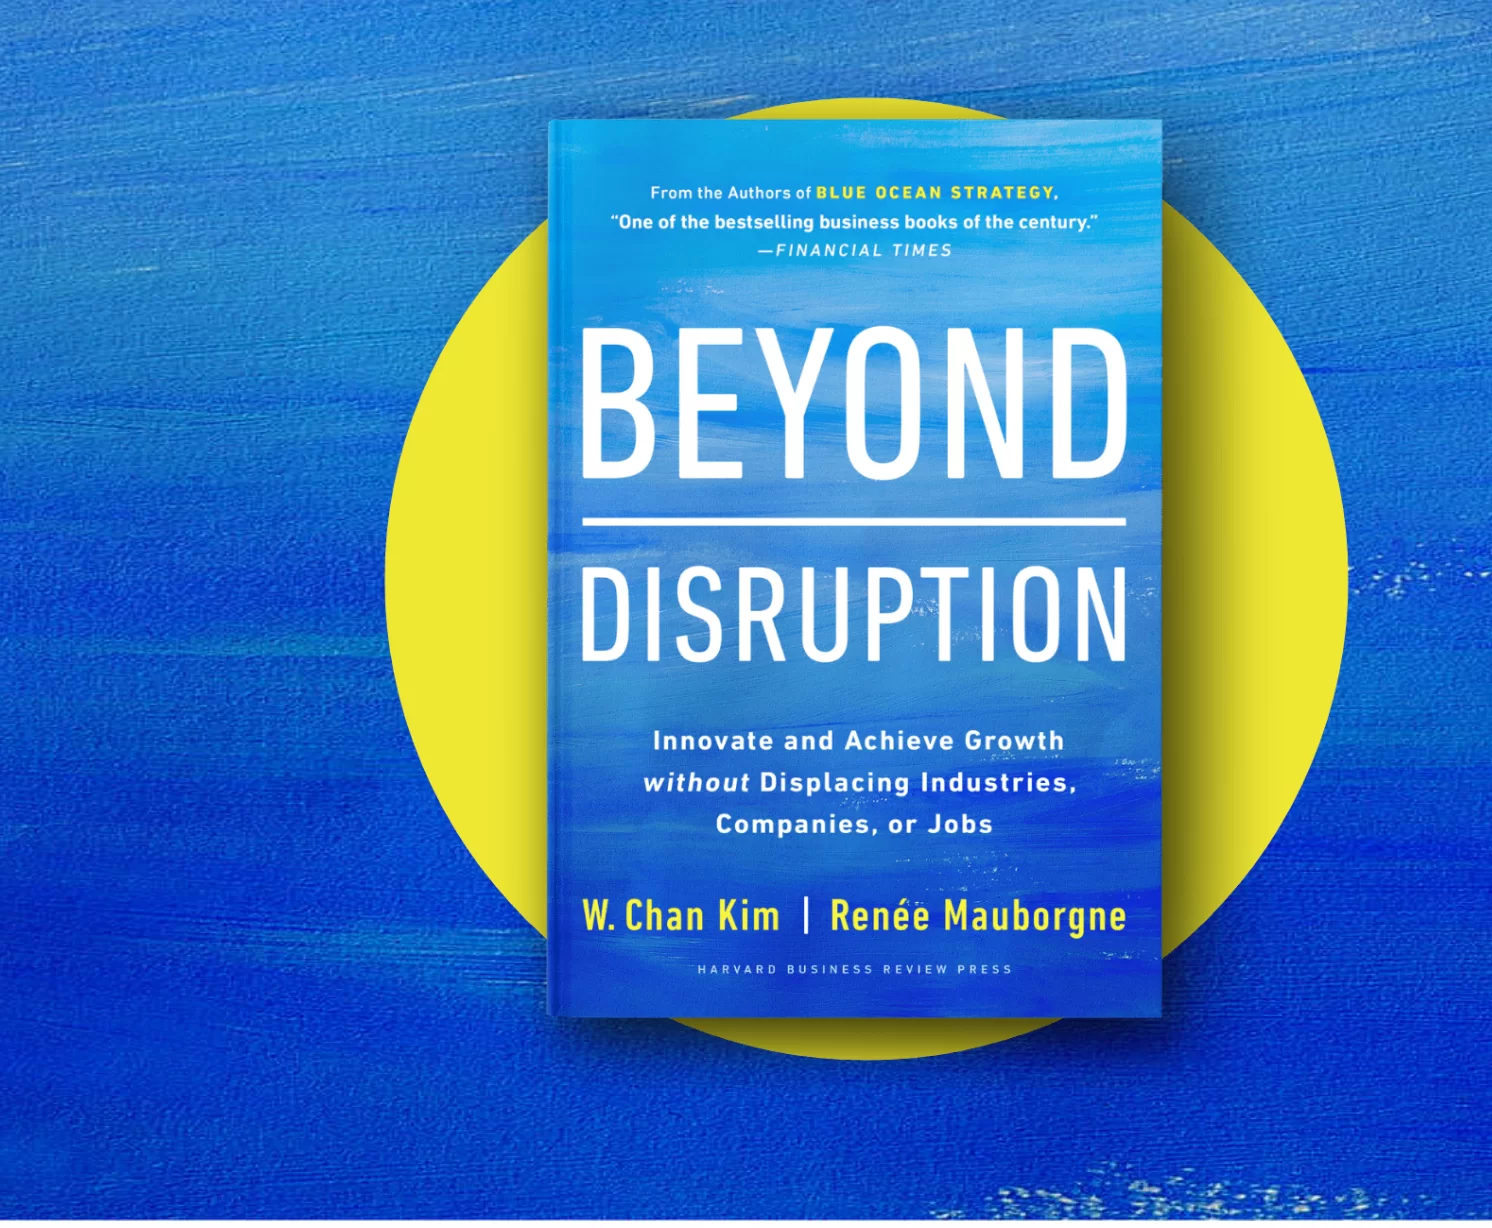 ‘Beyond Disruption’ is Renée Mauborgne’s newest bestseller